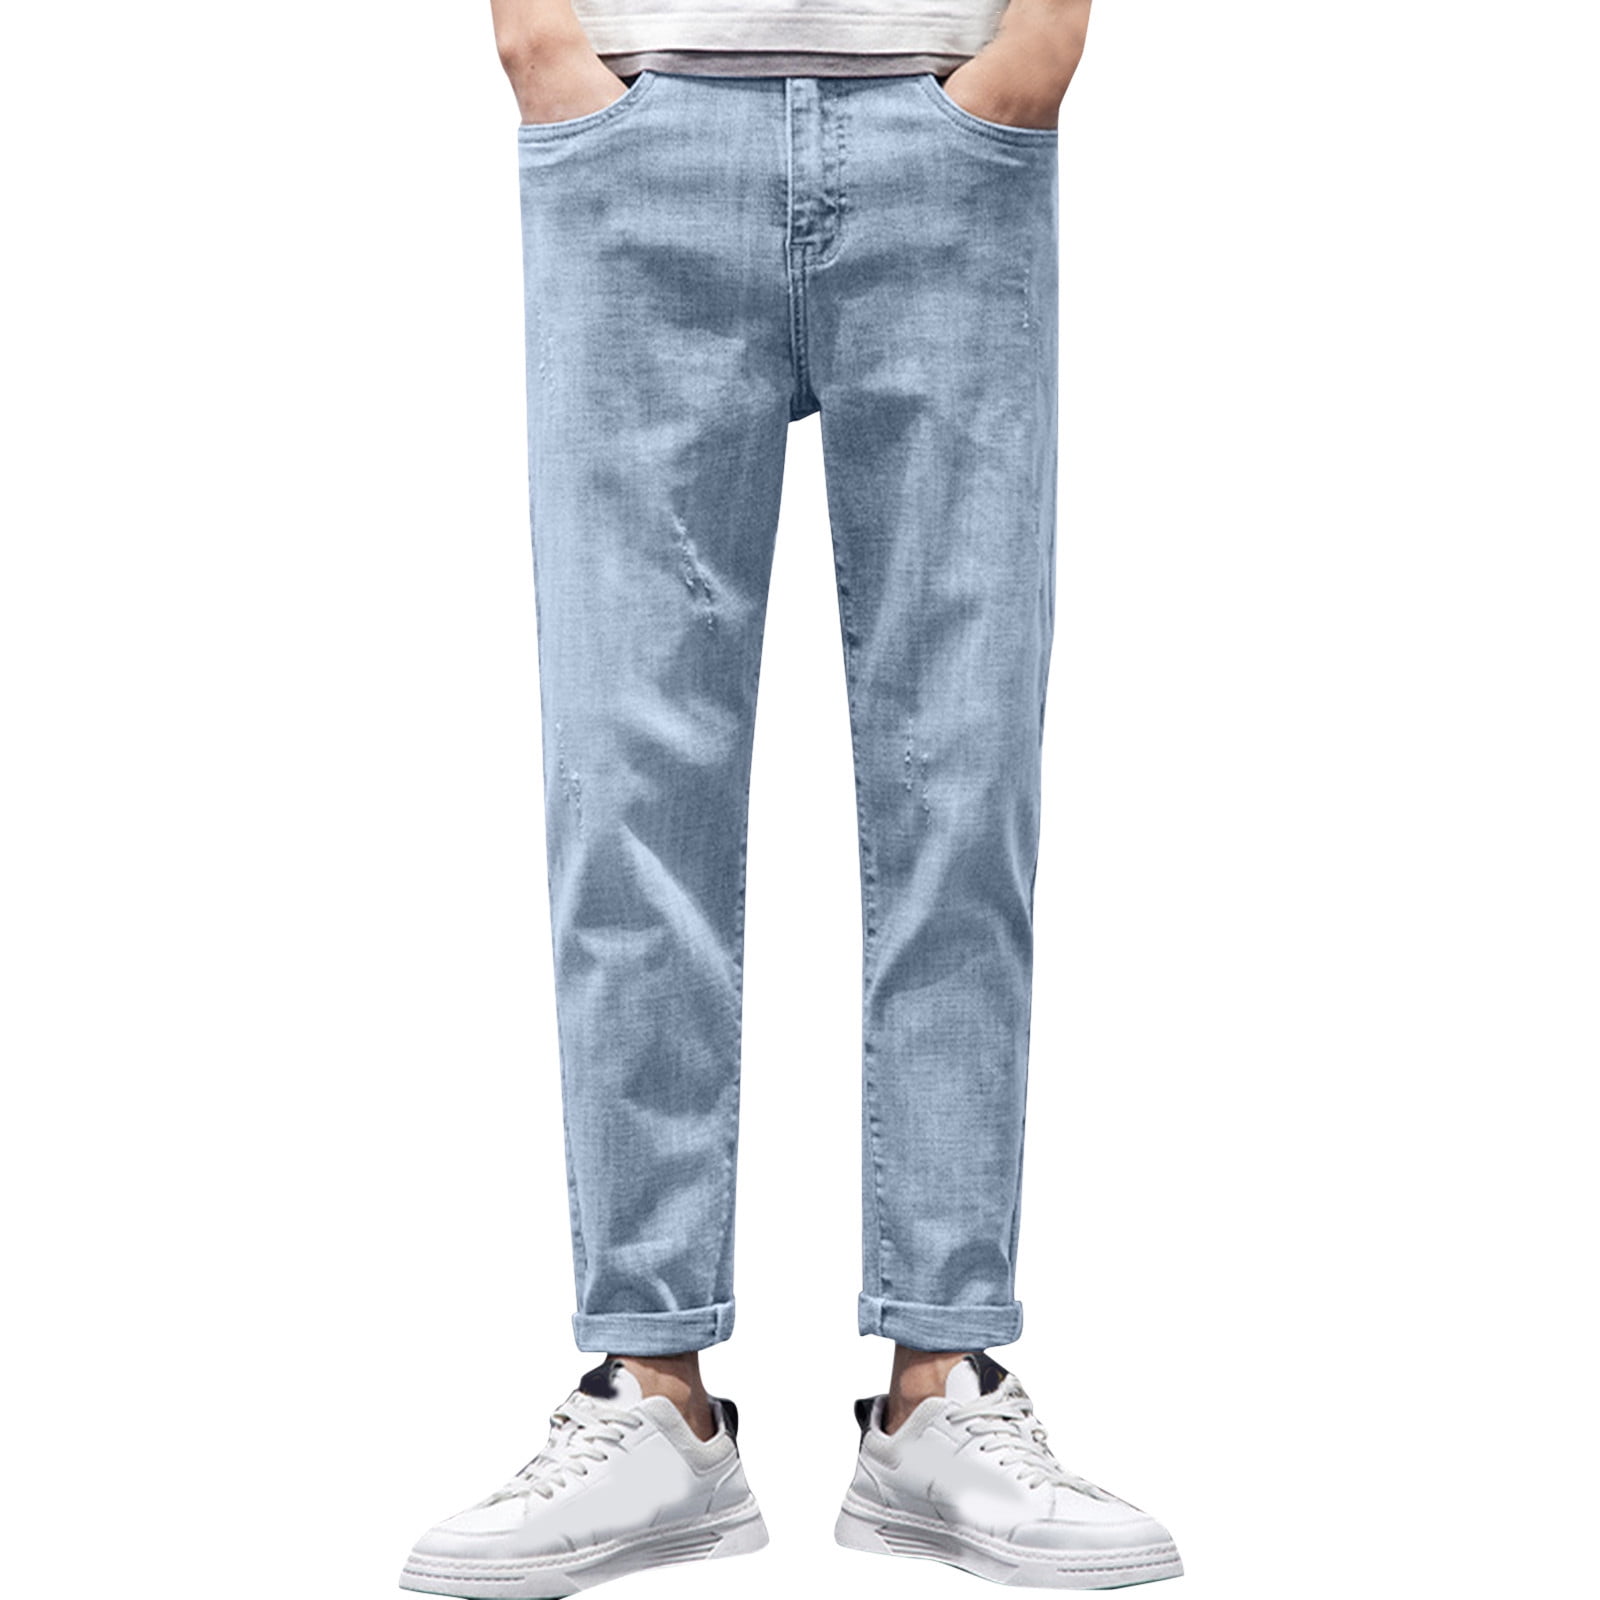 Embroidered Trousers Drawstring Pants Blue Biker Jeans Men Denim Thread for  Jeans Trouser Waist Size Saggy